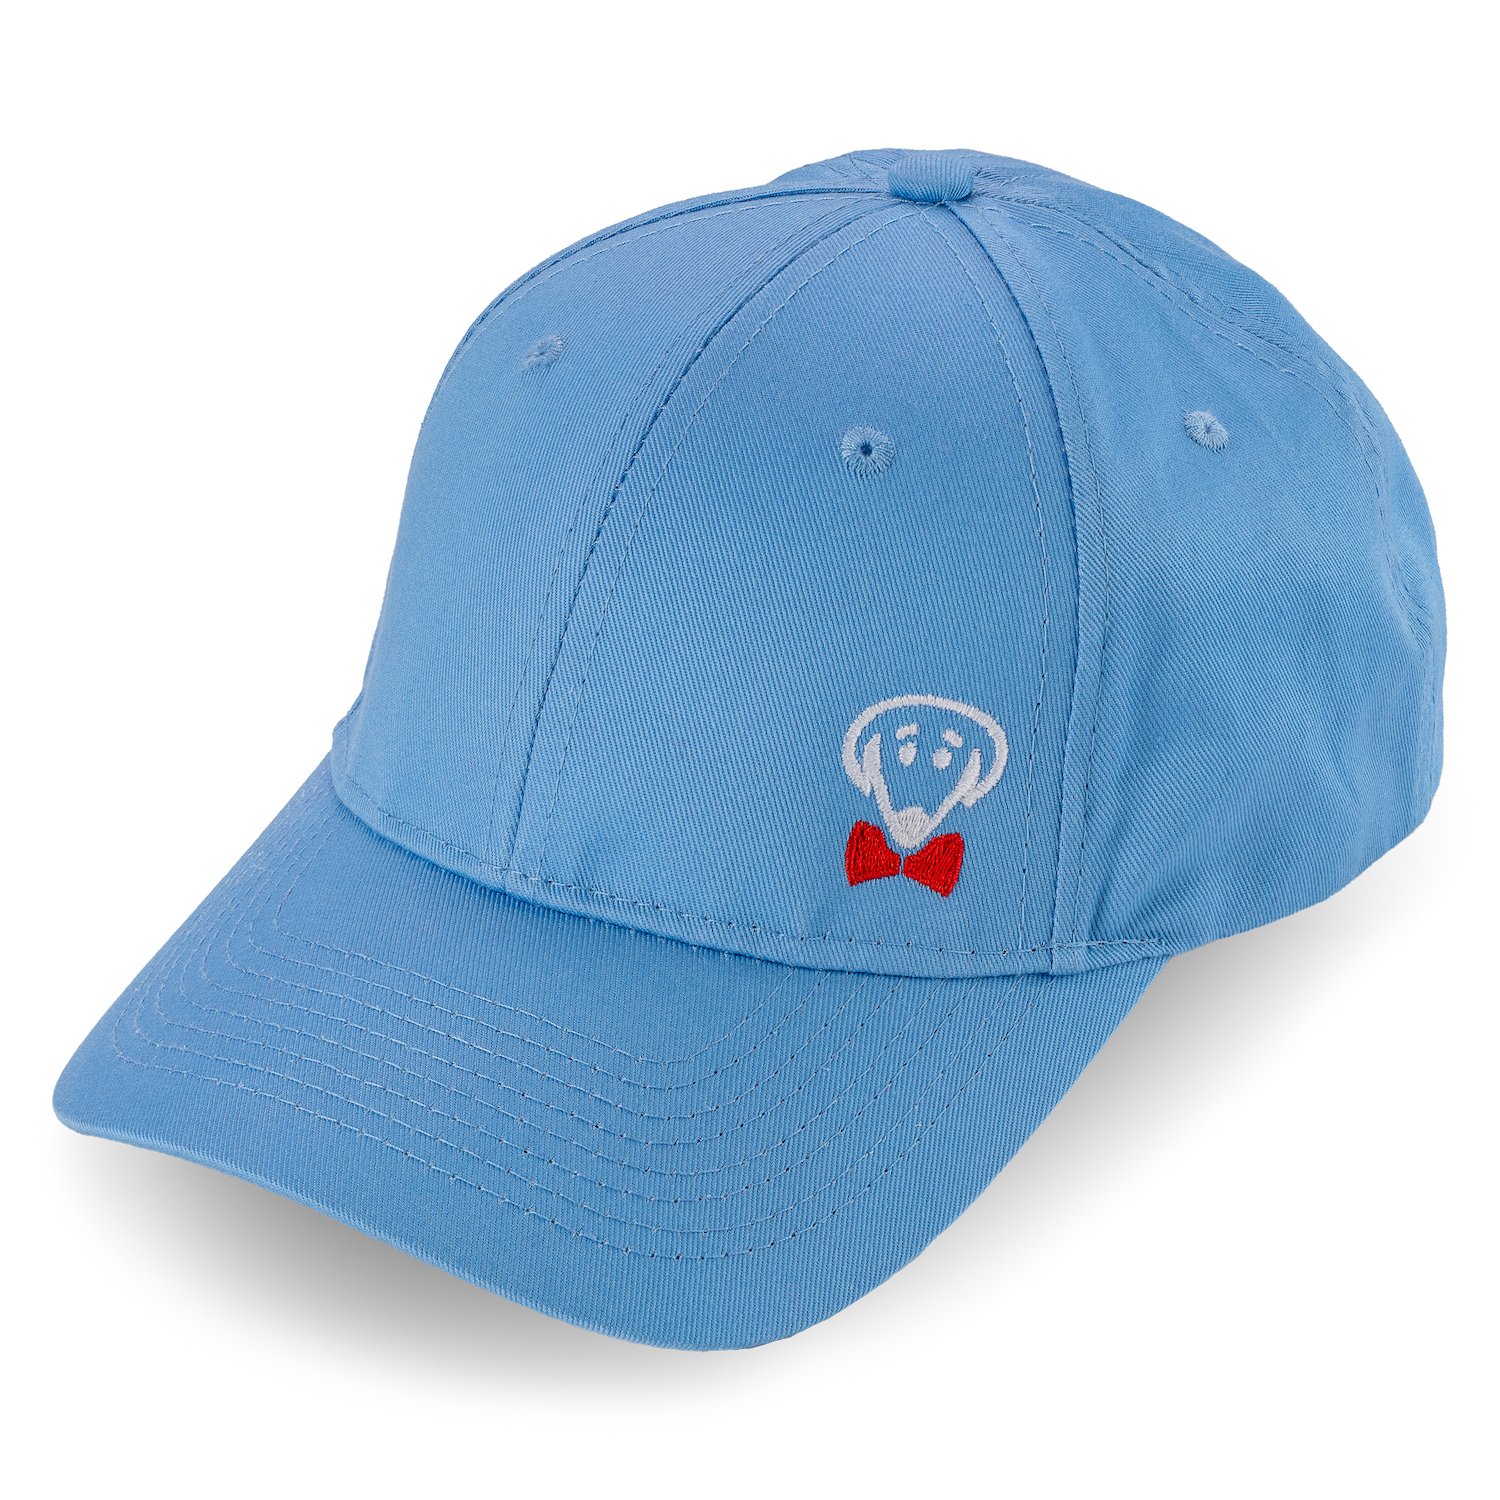 Beau Tyler - Austin hat Carolina blue front